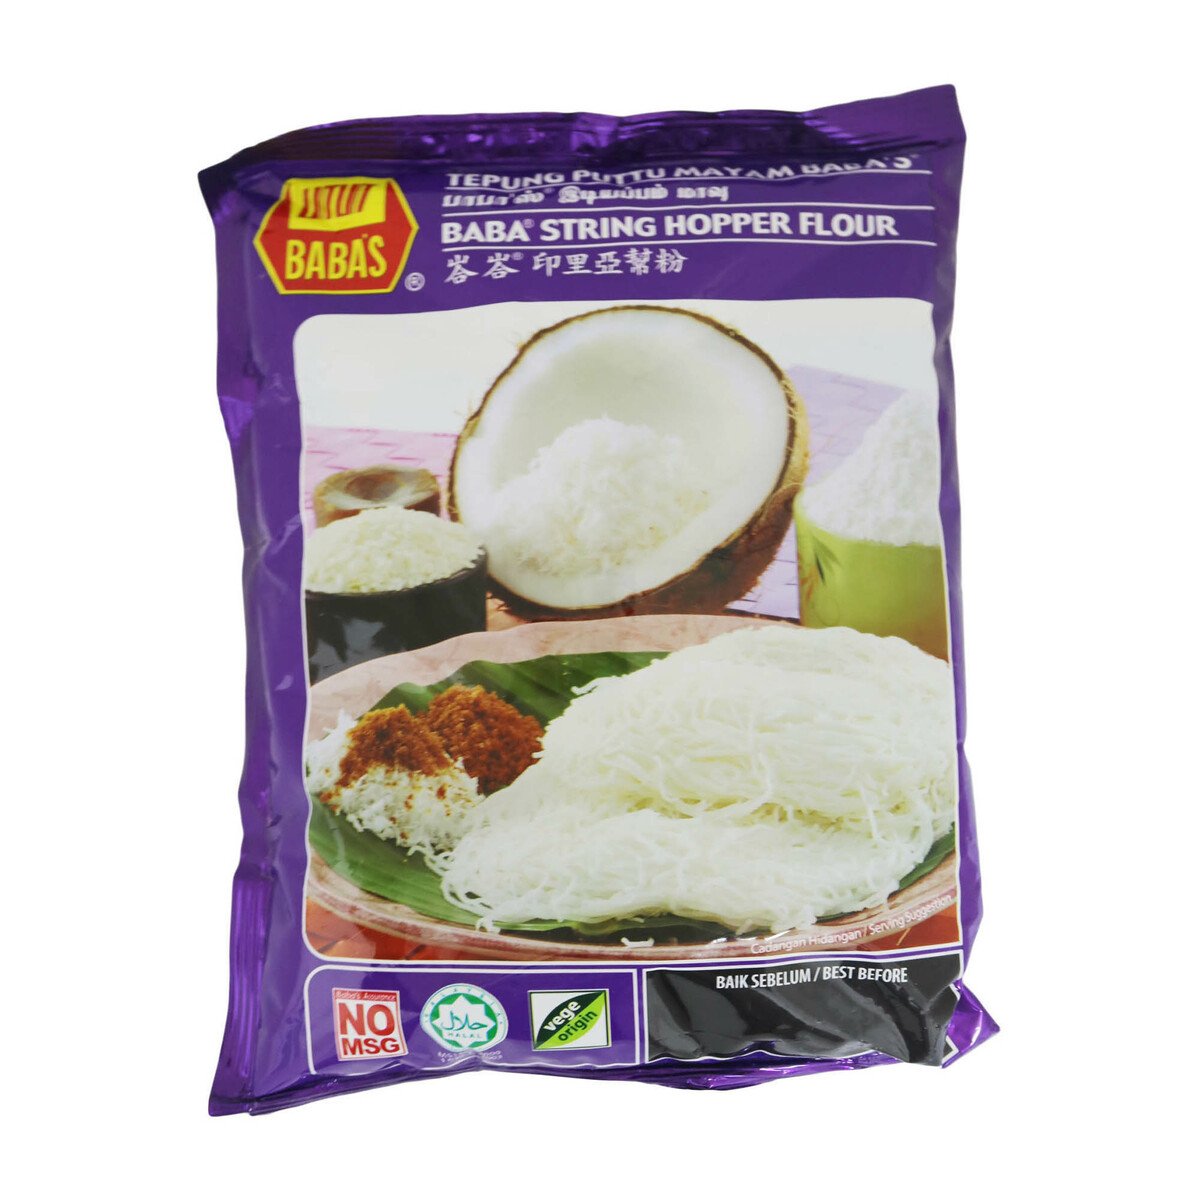 Babas String Hopper Flour (Idiyappam Flour) 500g